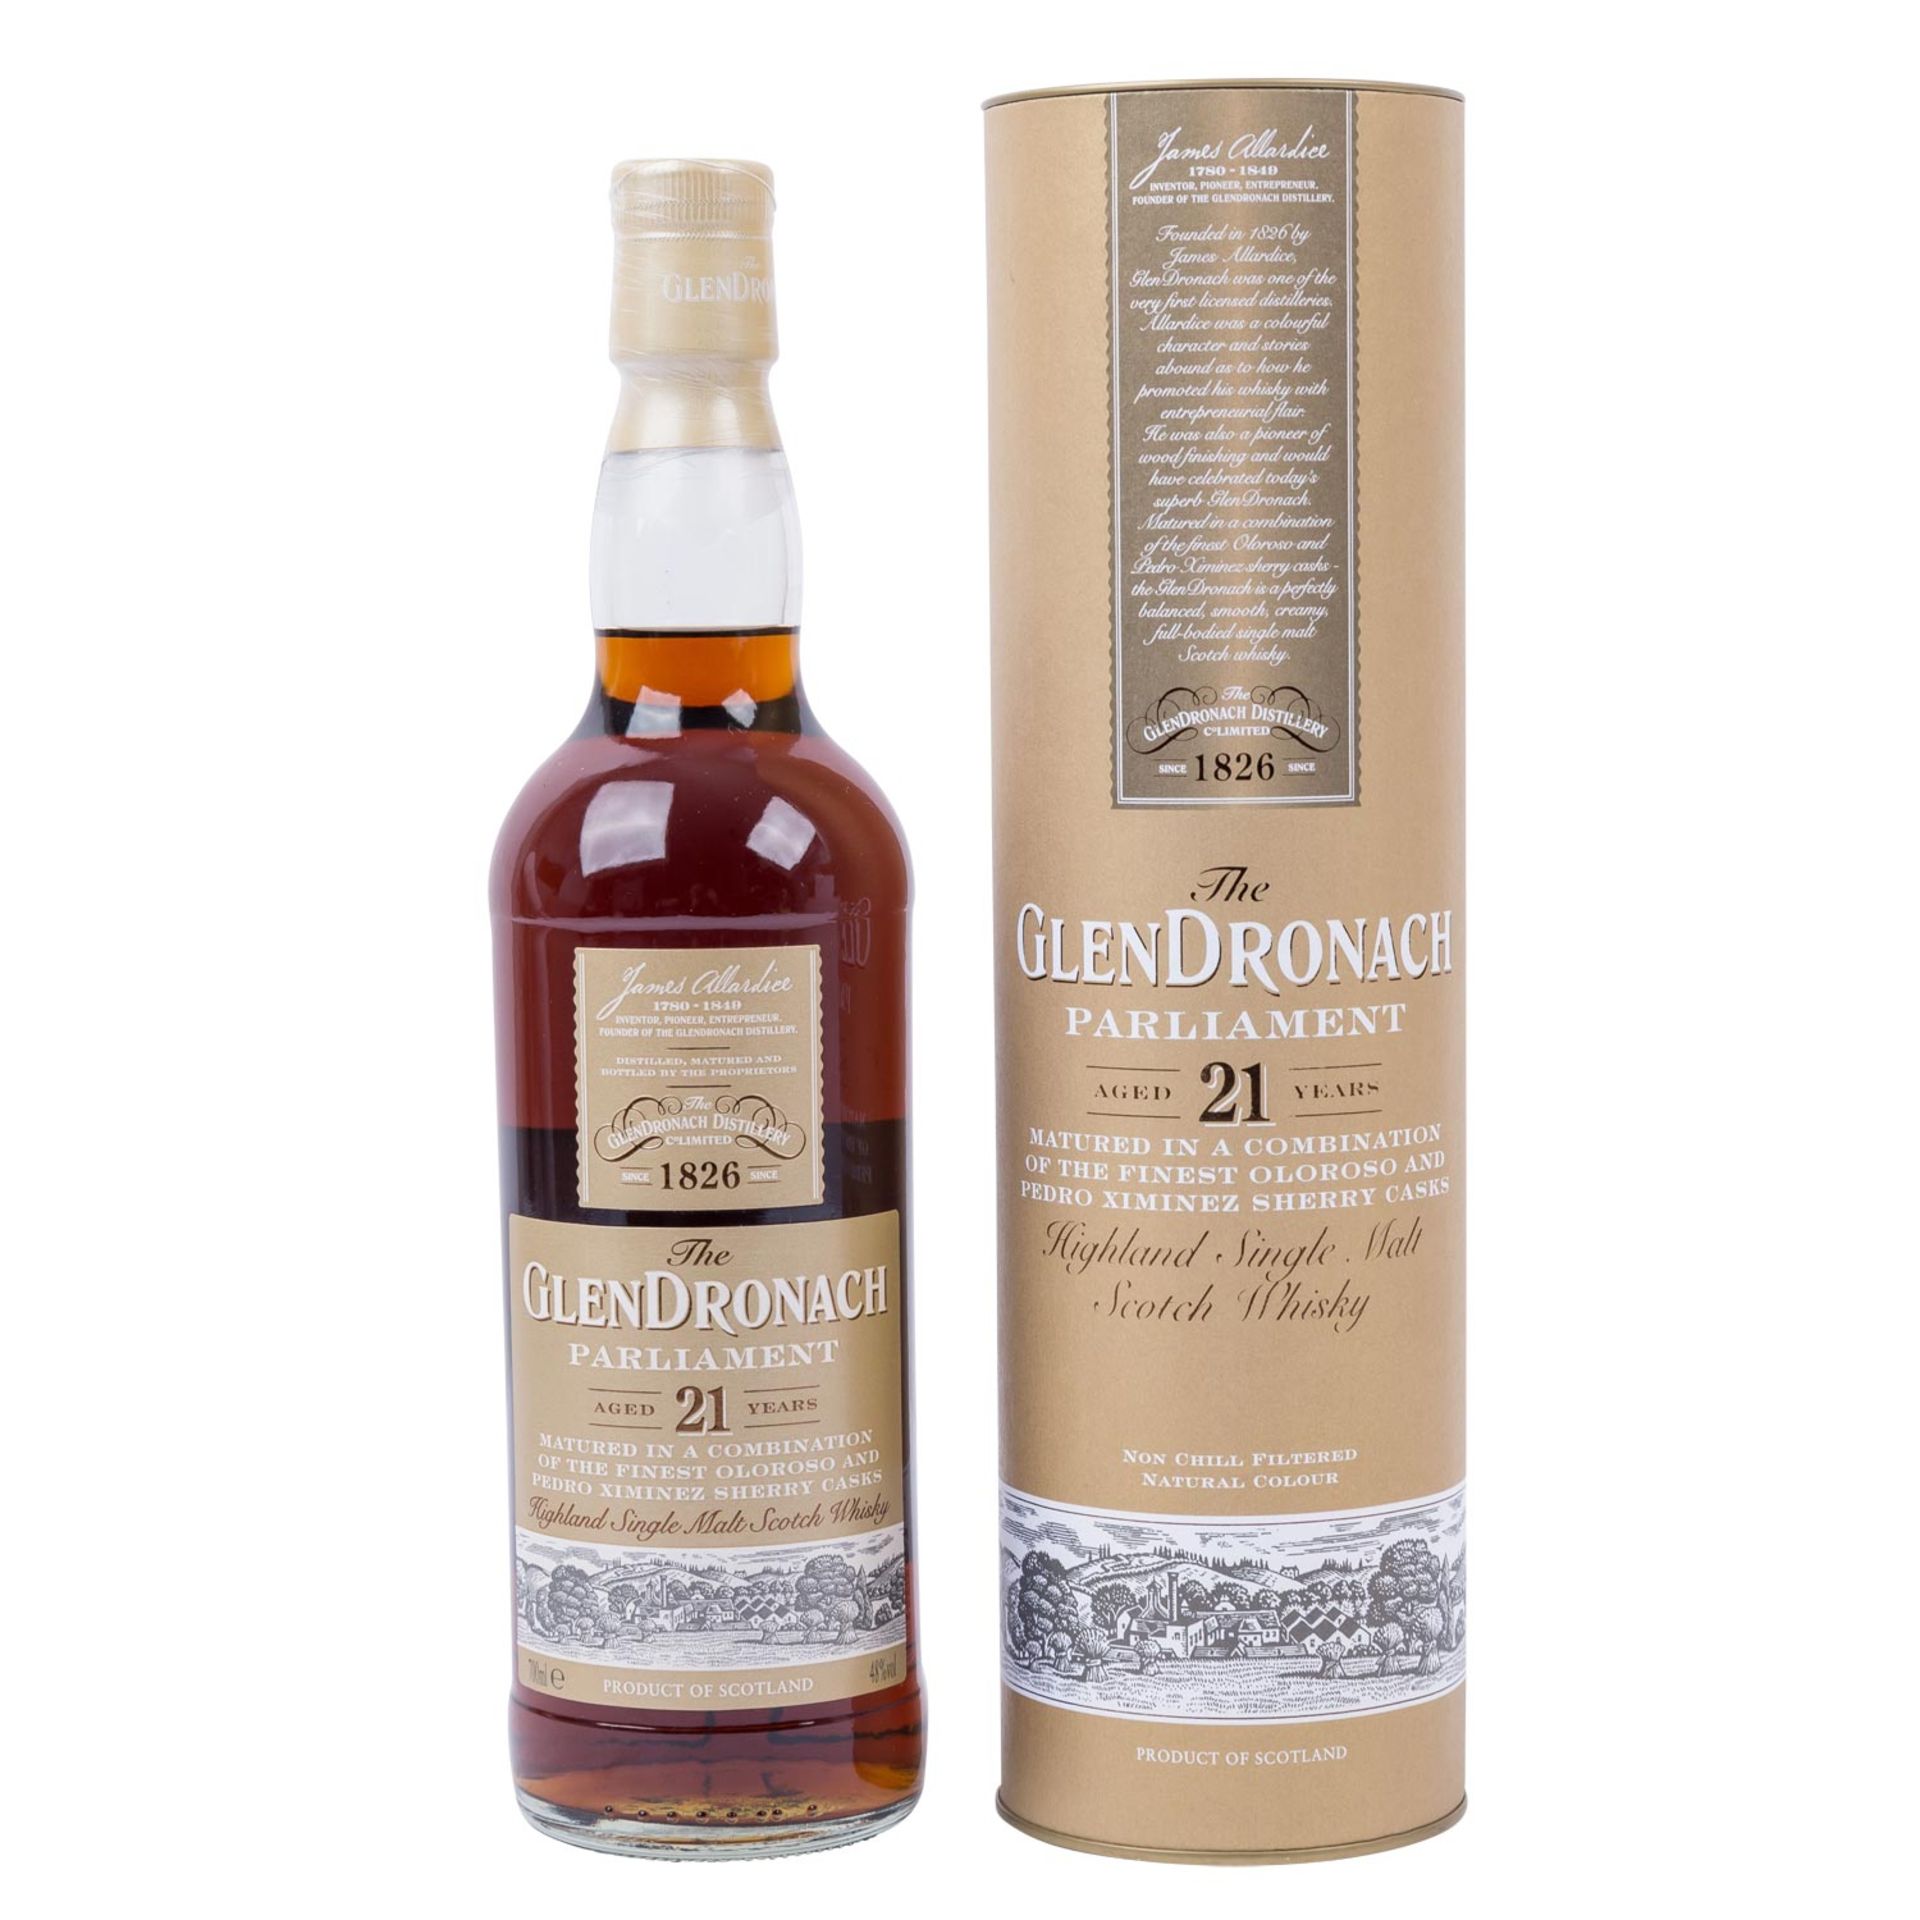 GLENDRONACH PARLIAMENT Highland Single Malt Scotch Whisky 'Aged 21 Years'